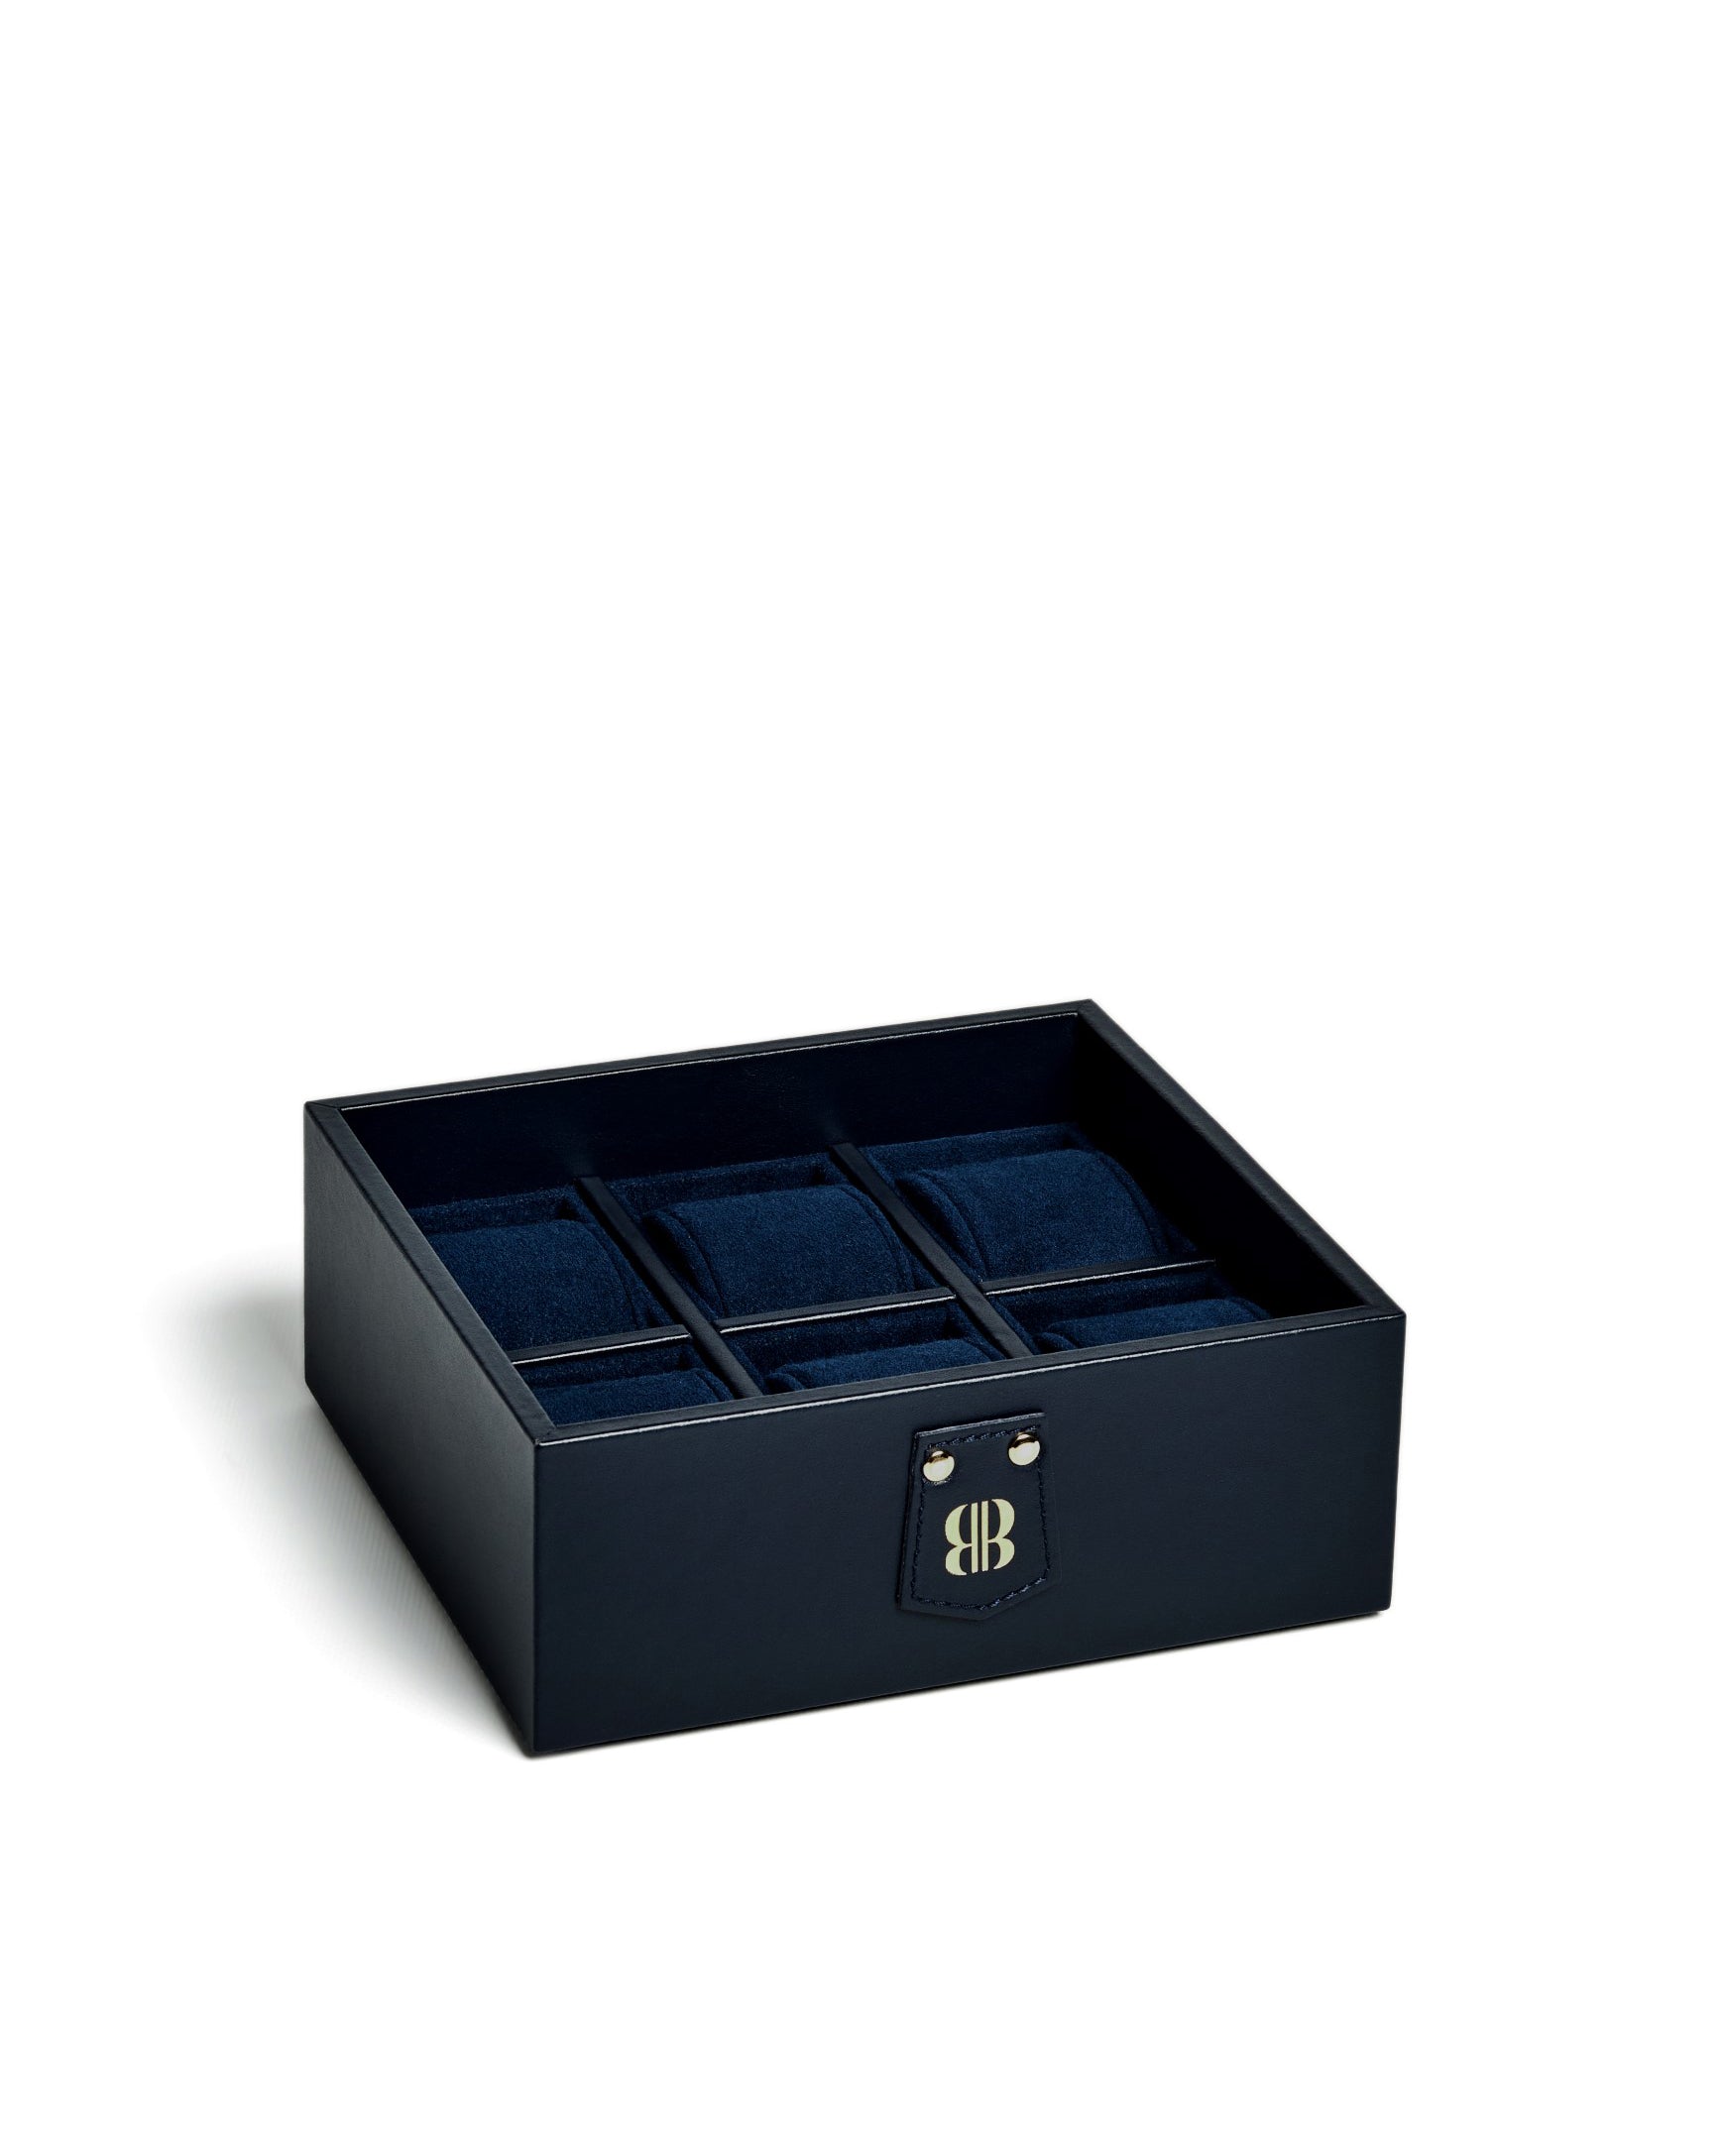 Bernardini Milano Watch Holder with 12 watches capacity- blue leather and blue alcantara